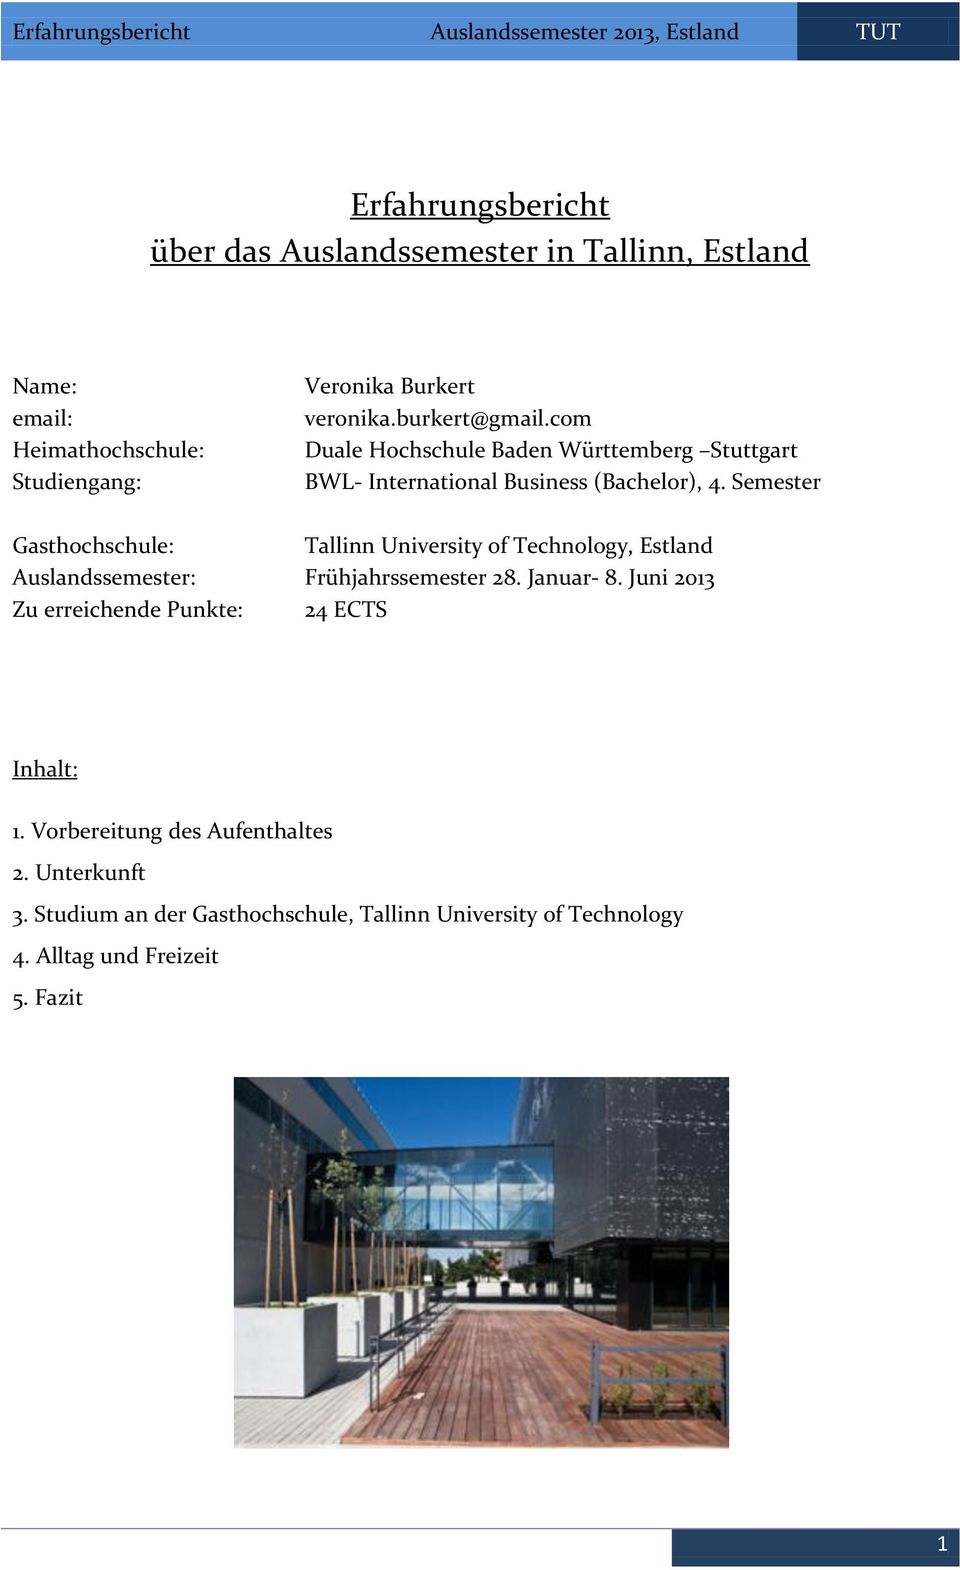 Semester Gasthochschule: Tallinn University of Technology, Estland Auslandssemester: Frühjahrssemester 28. Januar- 8.